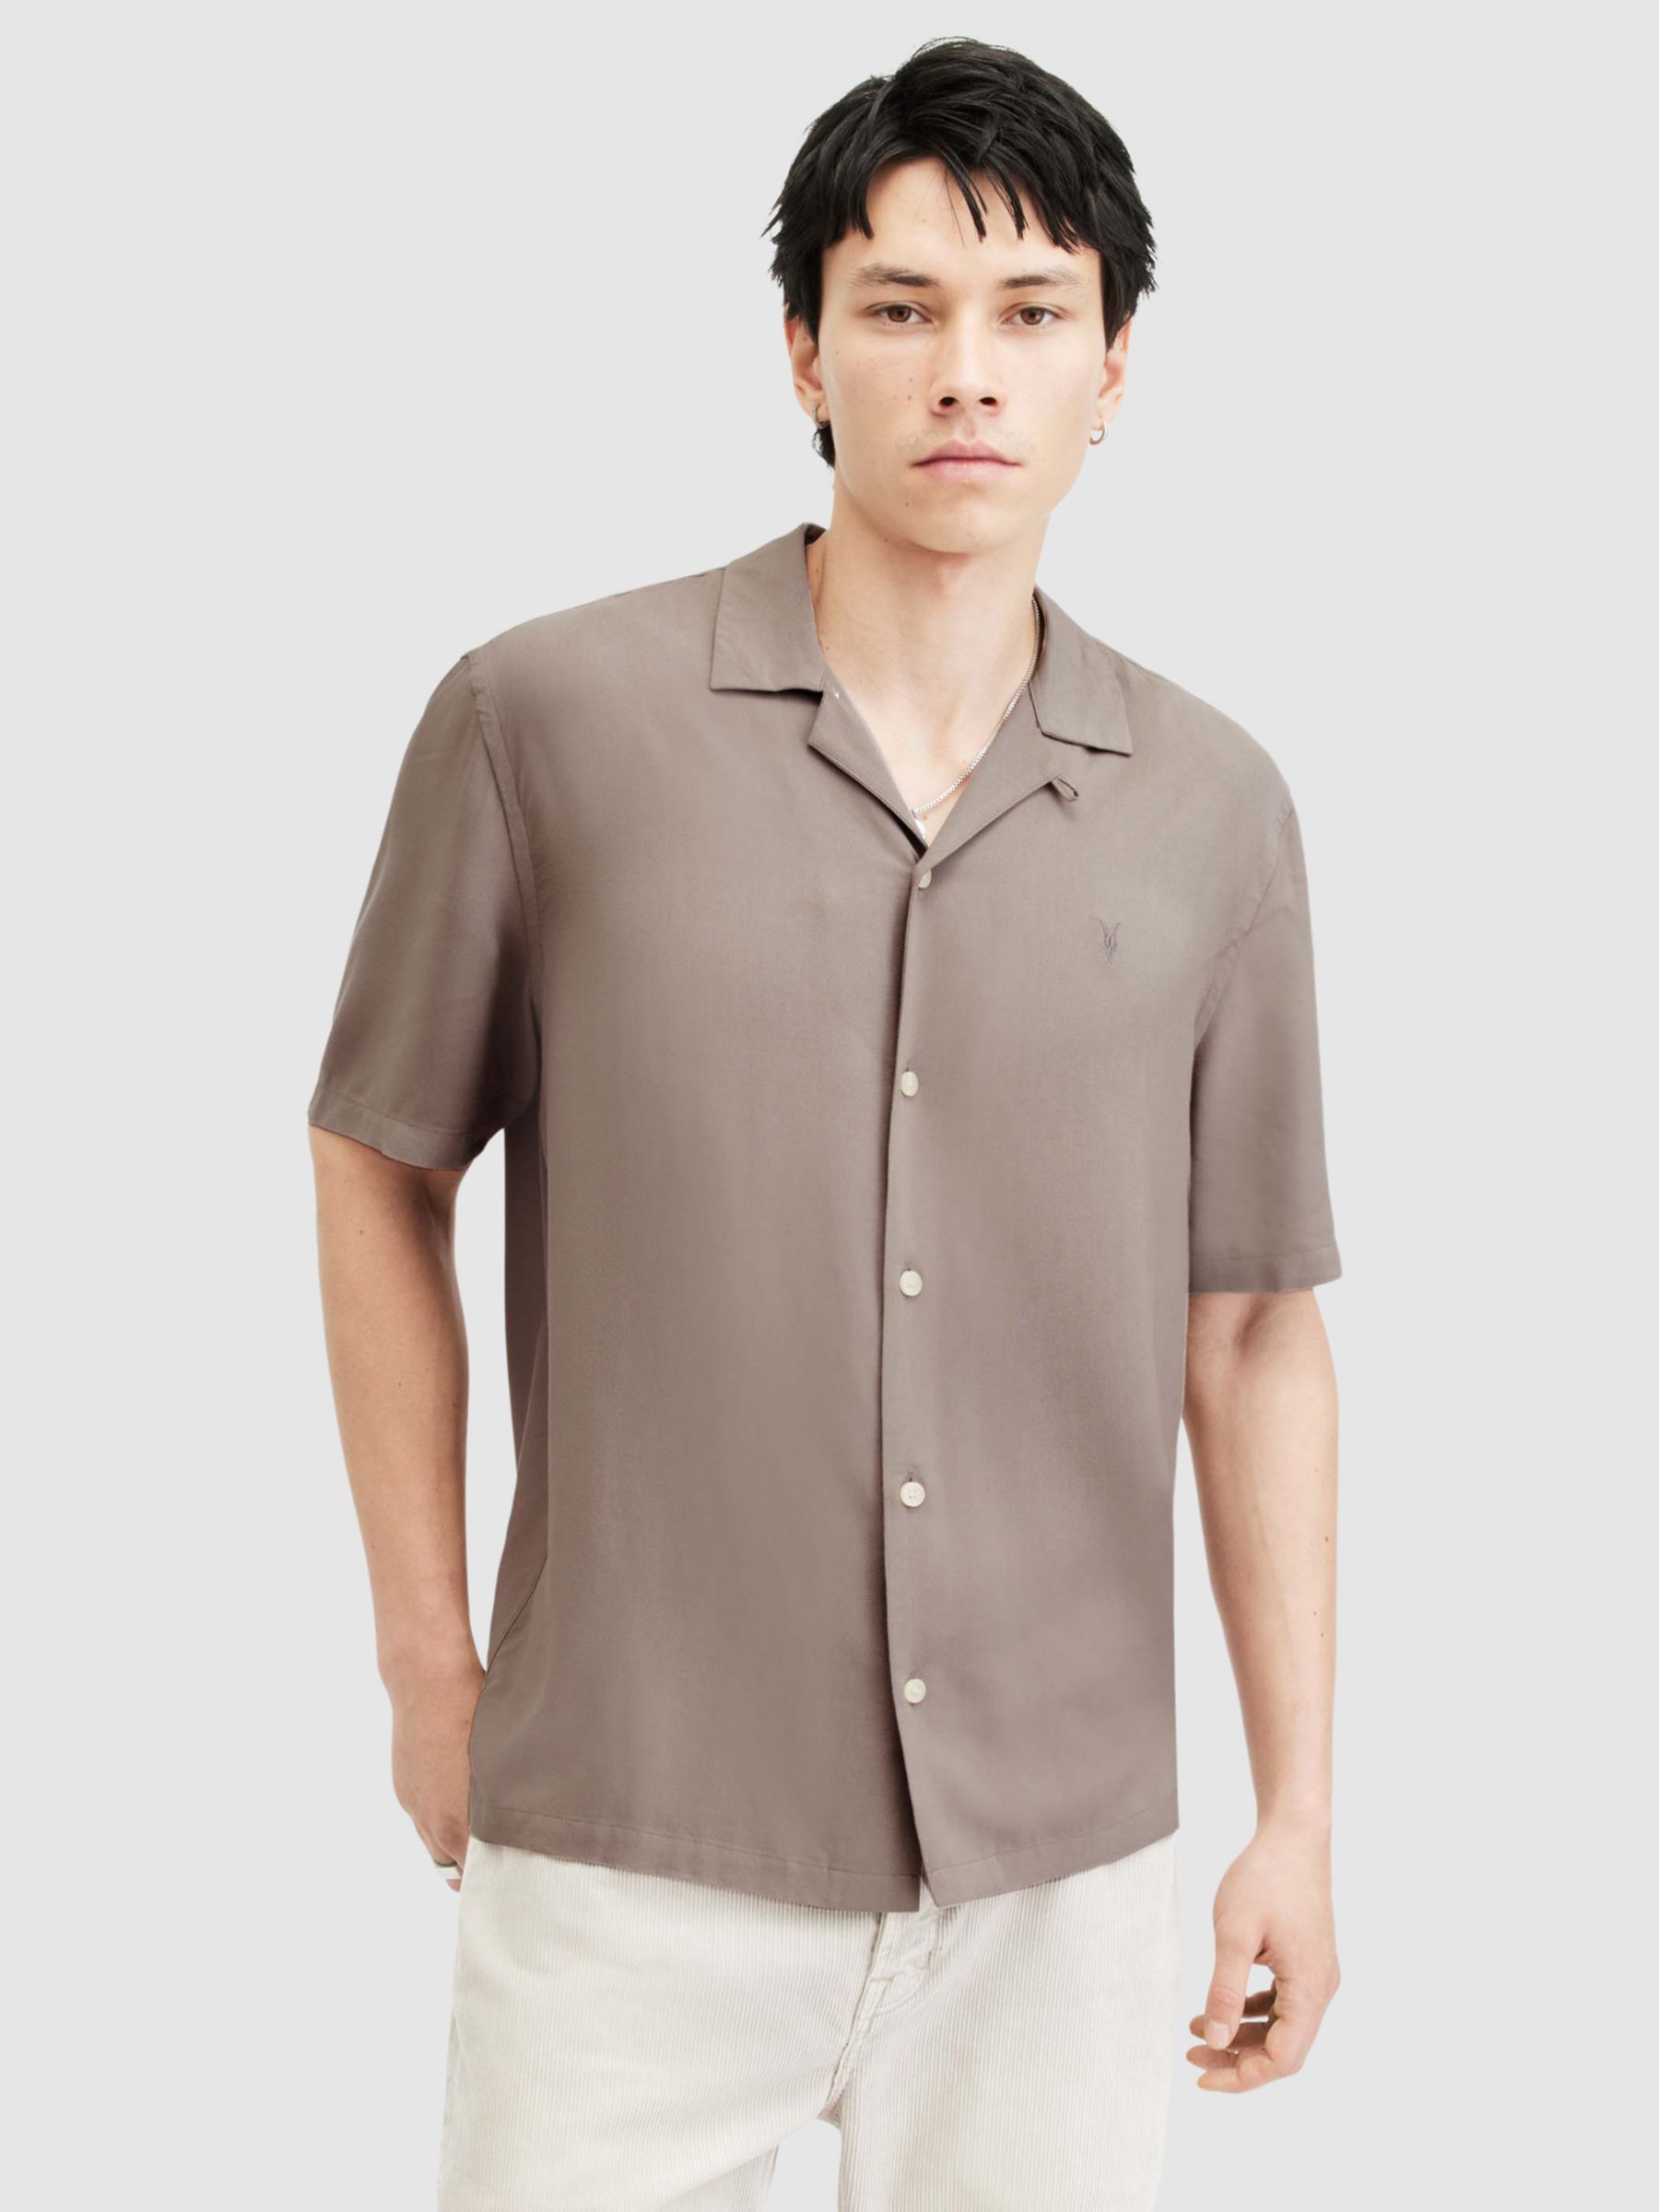 AllSaints Venice Short Sleeved Shirt, Chestnut Brown, XS